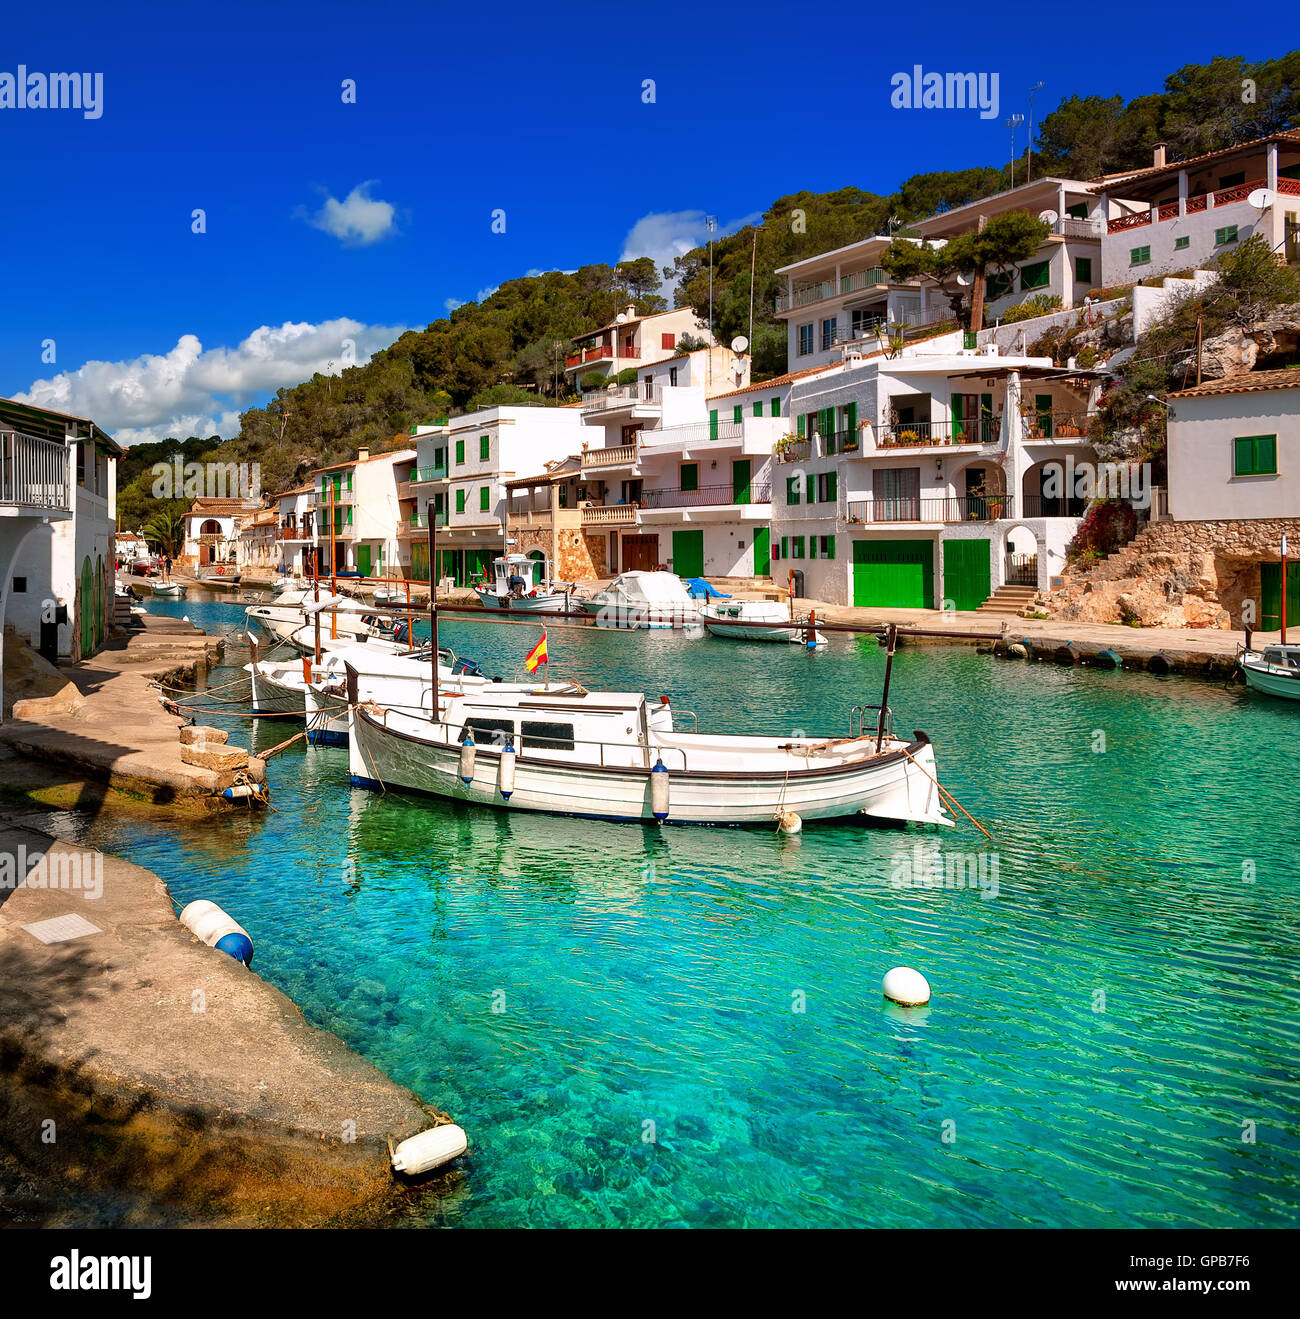 White villas and boats on green water in picturesque fishermen village Cala Figuera, Mediterranean Sea, Mallorca, Spain Stock Photo